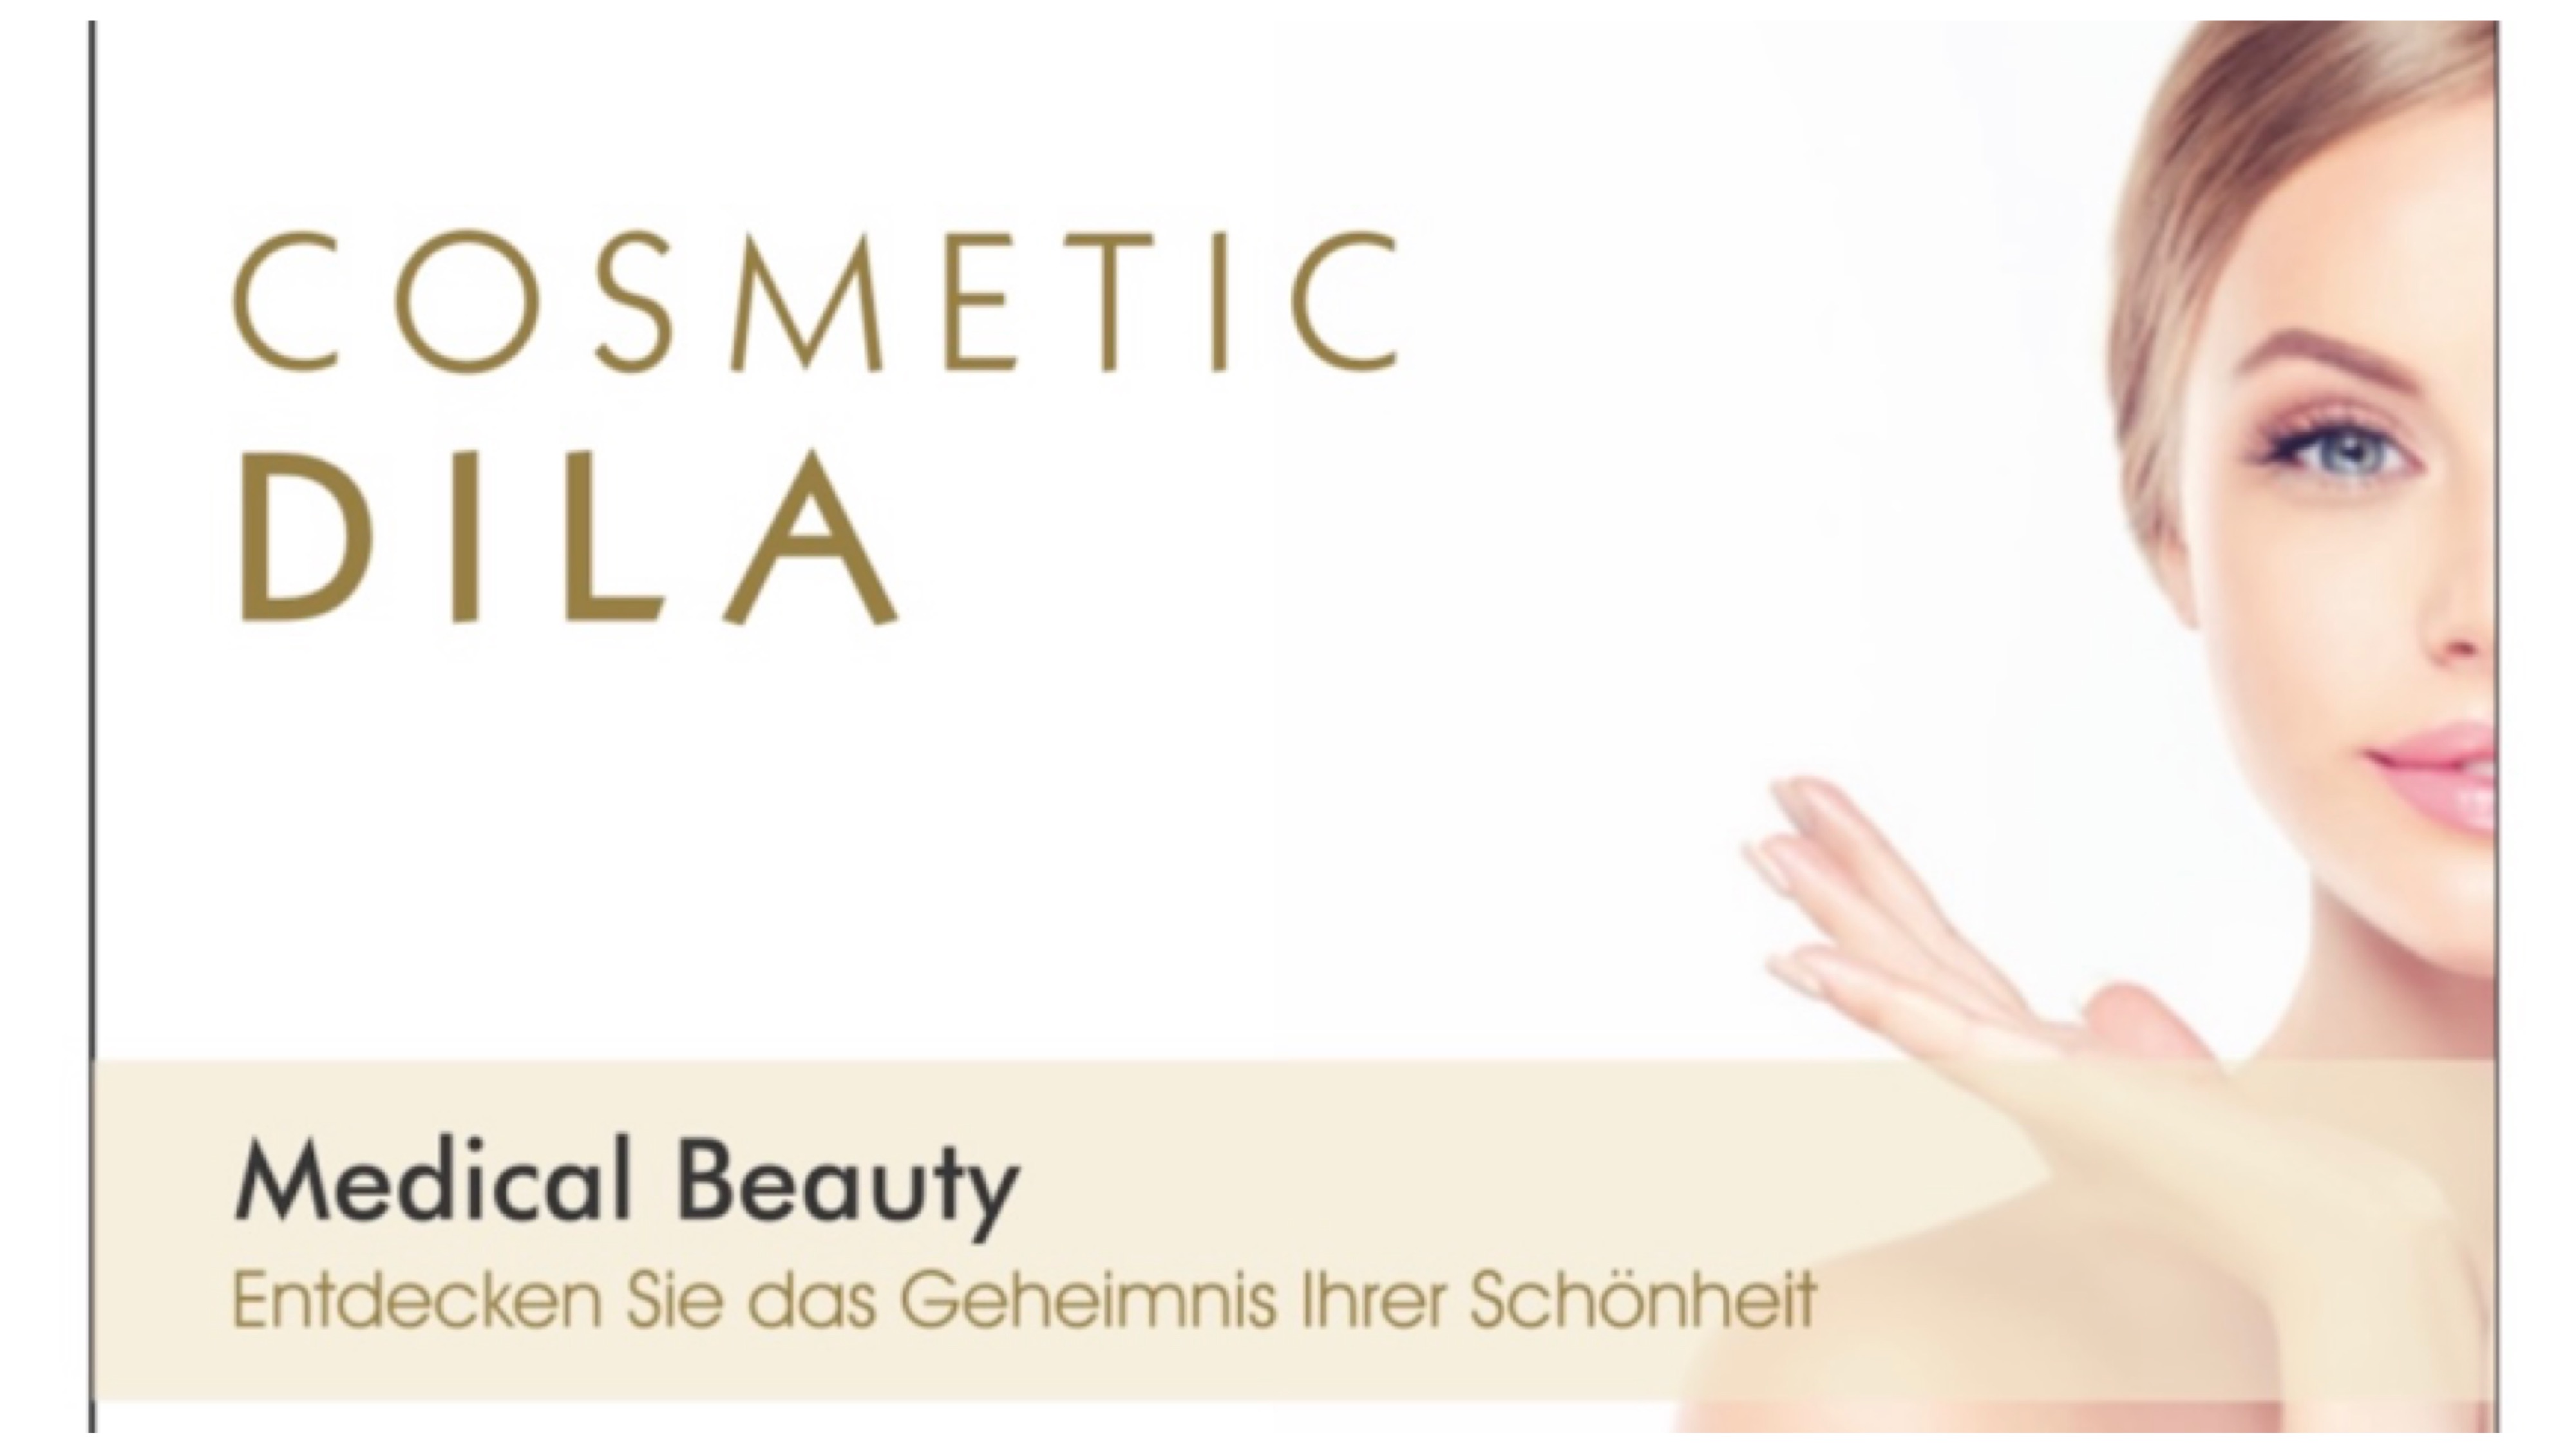 Cosmetic dilá medical beauty Logo